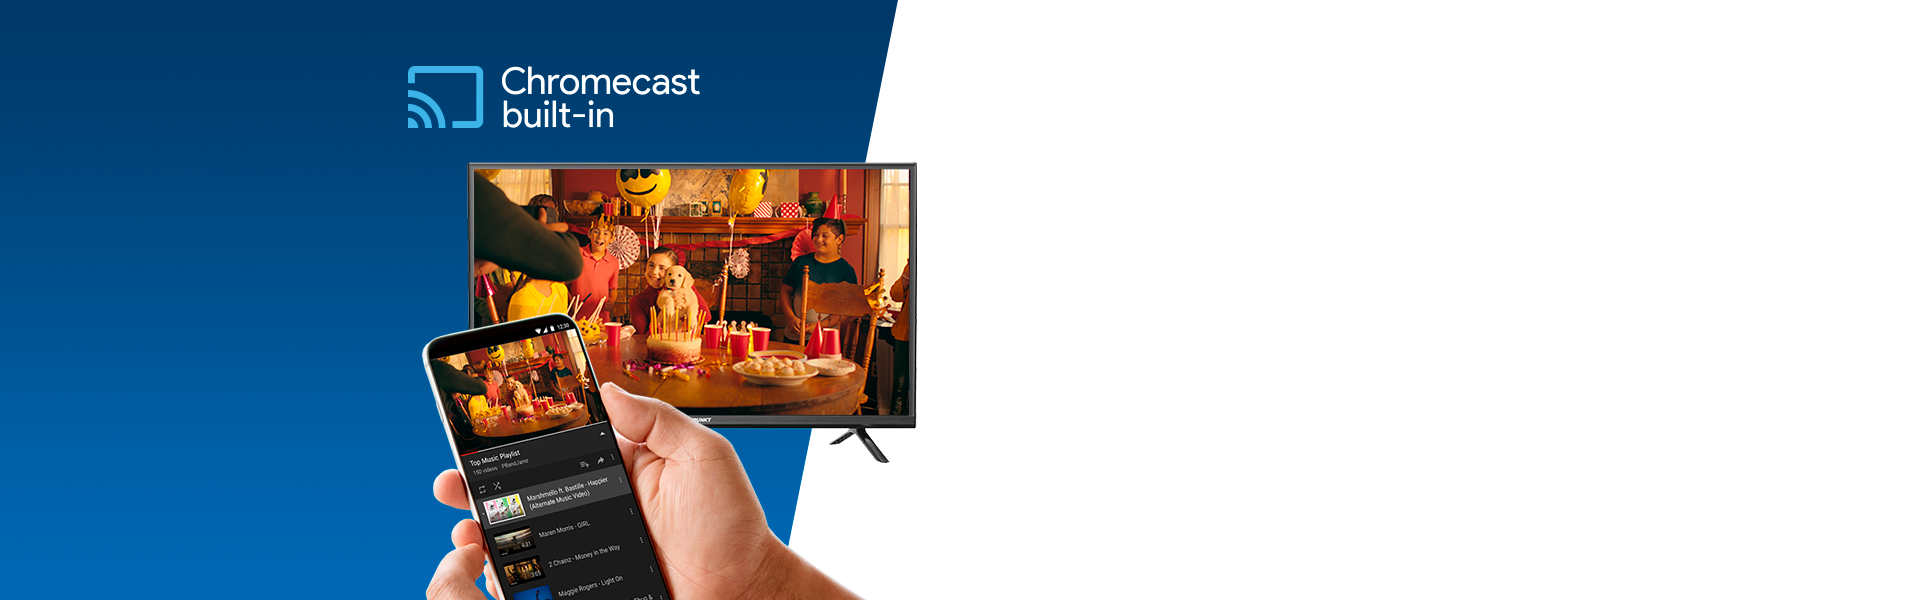 Full-HD Android TV Blaupunkt 32FB5000